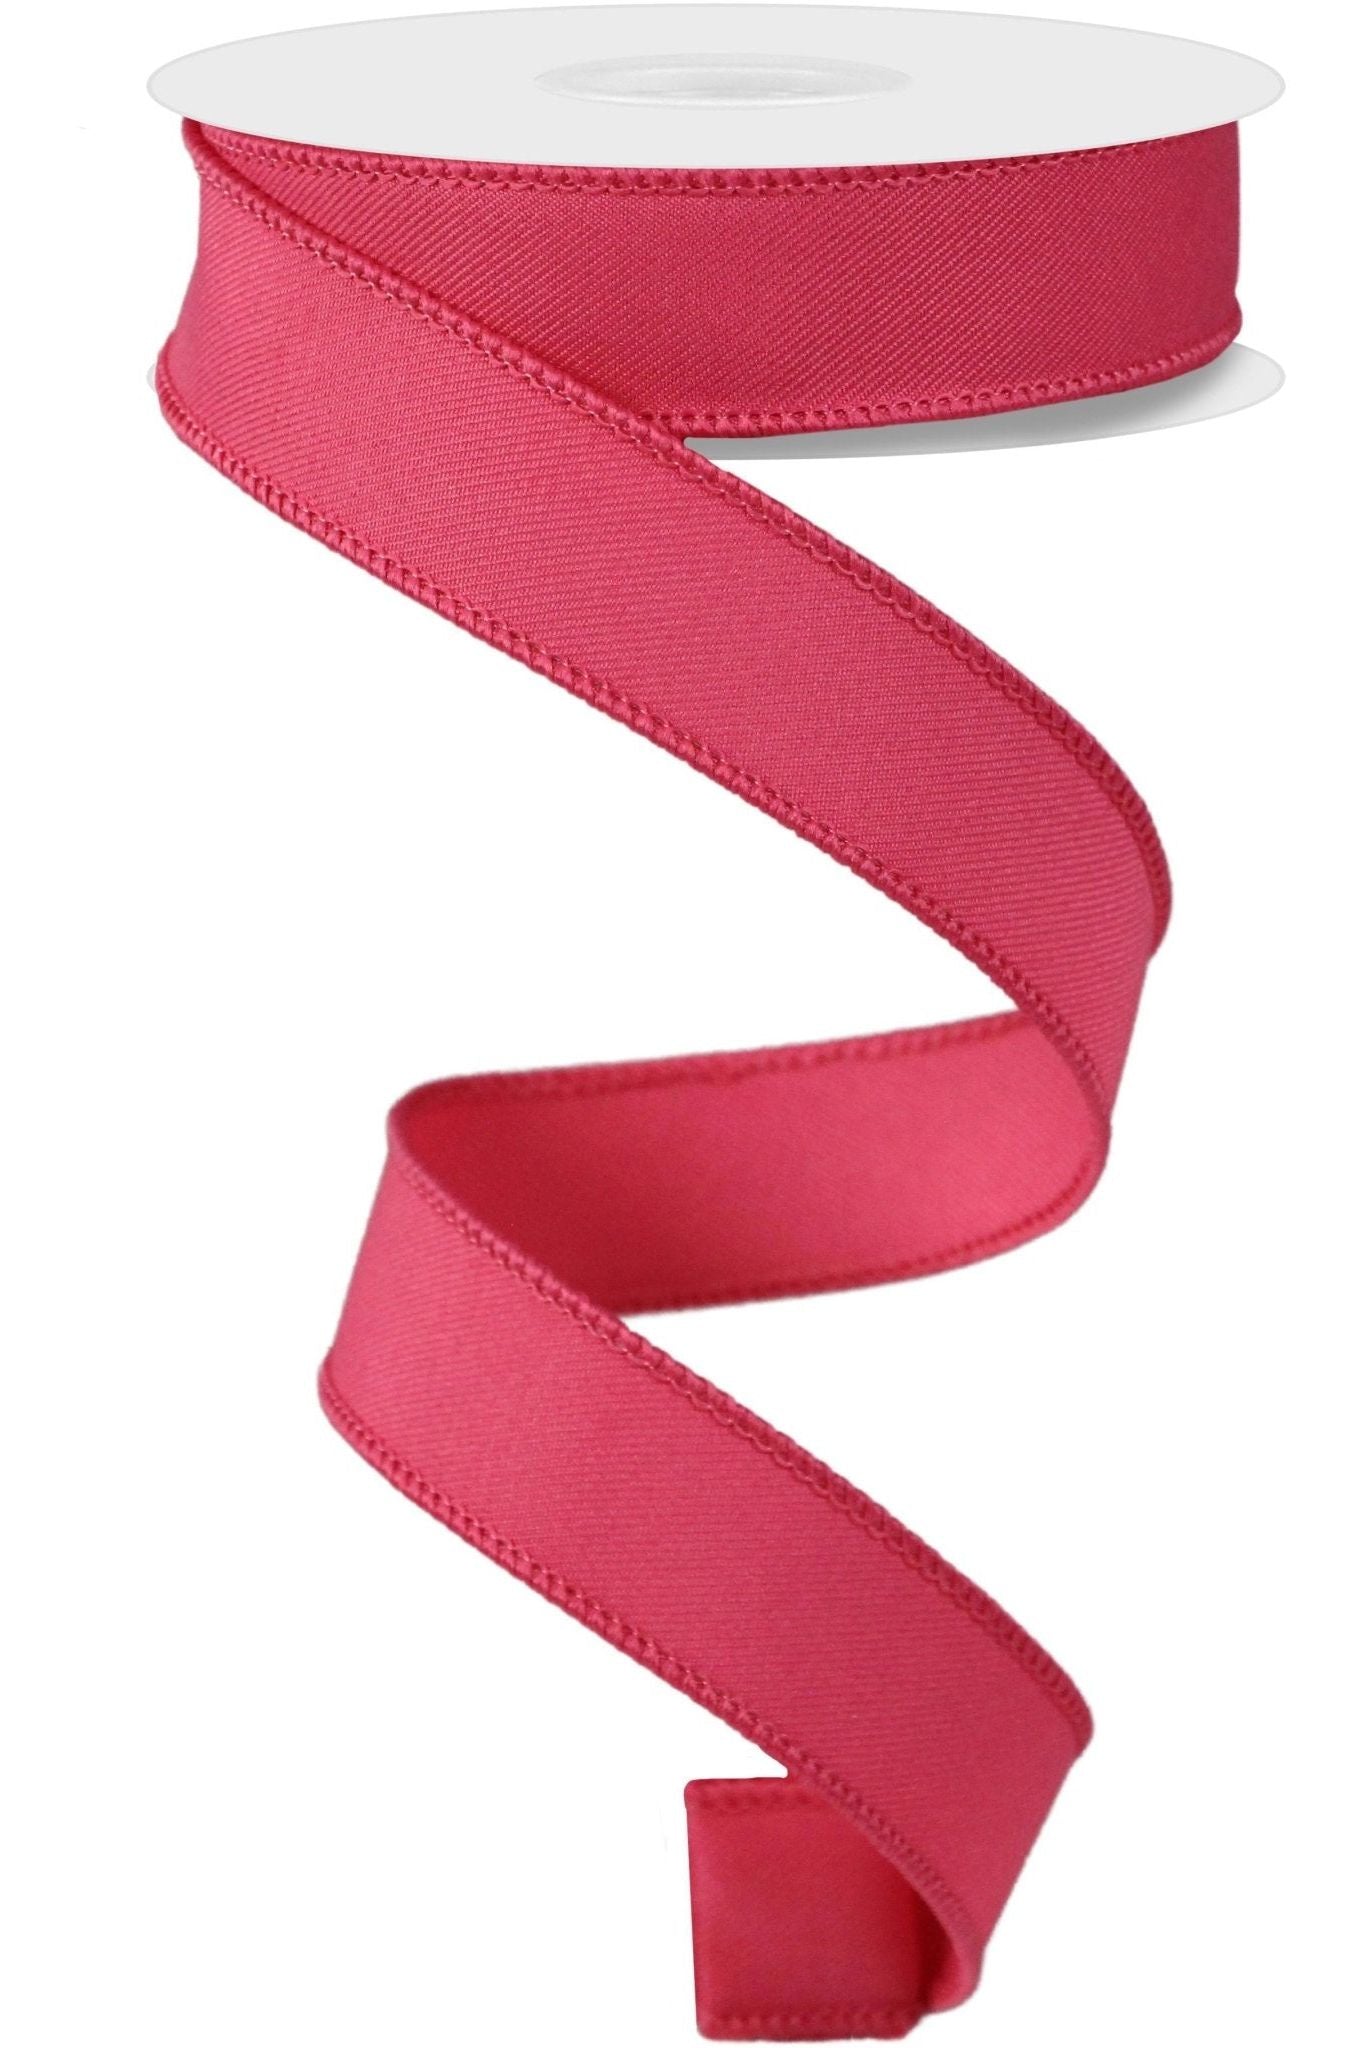 Shop For 7/8" Diagonal Weave Ribbon: Hot Pink (10 Yards) RGE720211